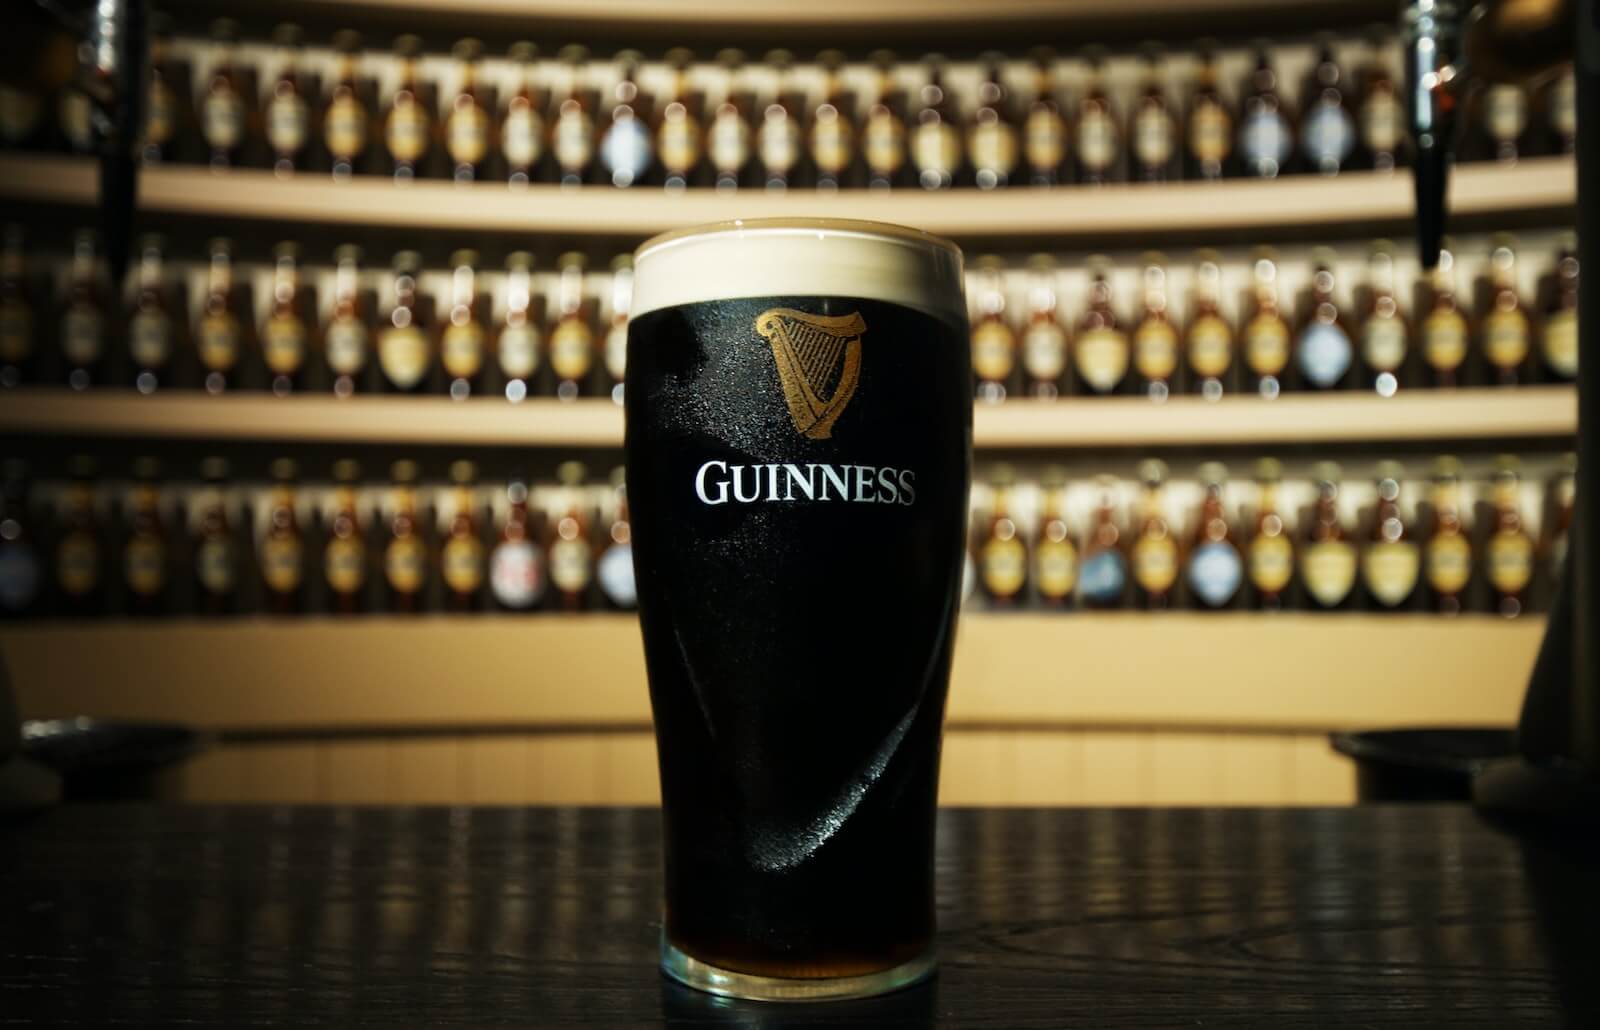 Guinness glass of beer